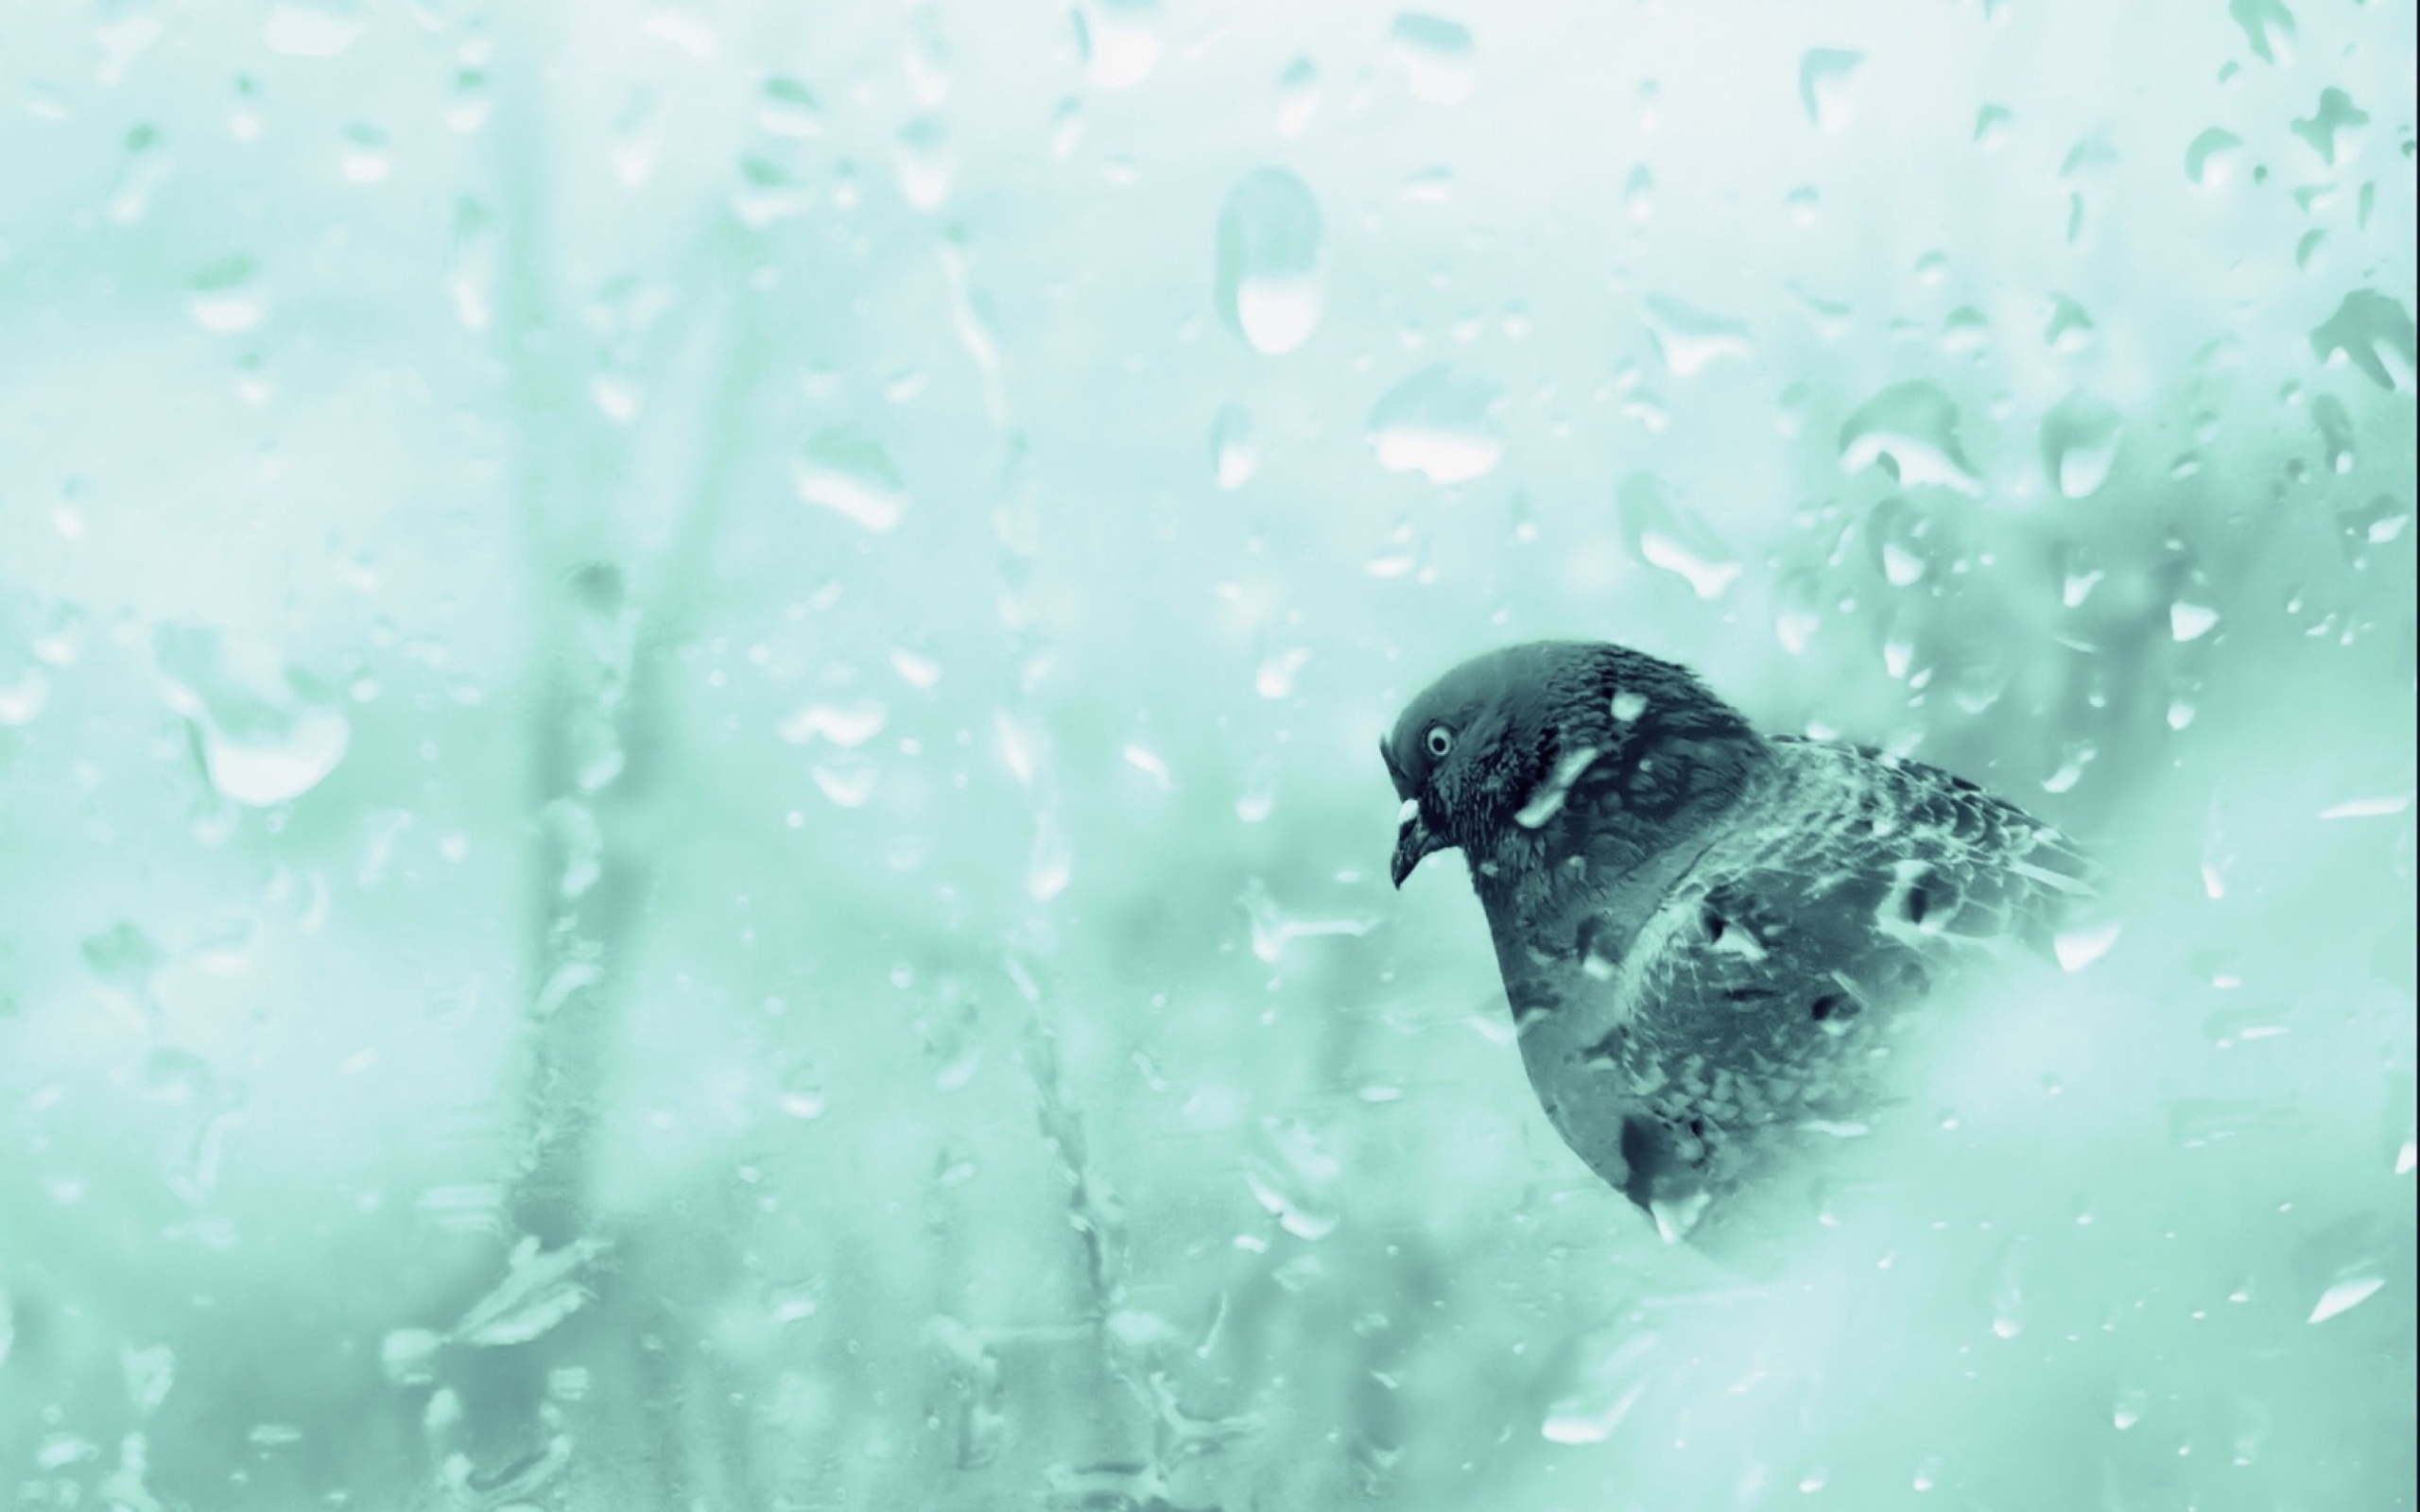 Pigeon In Rain Drops wallpaper 2560x1600